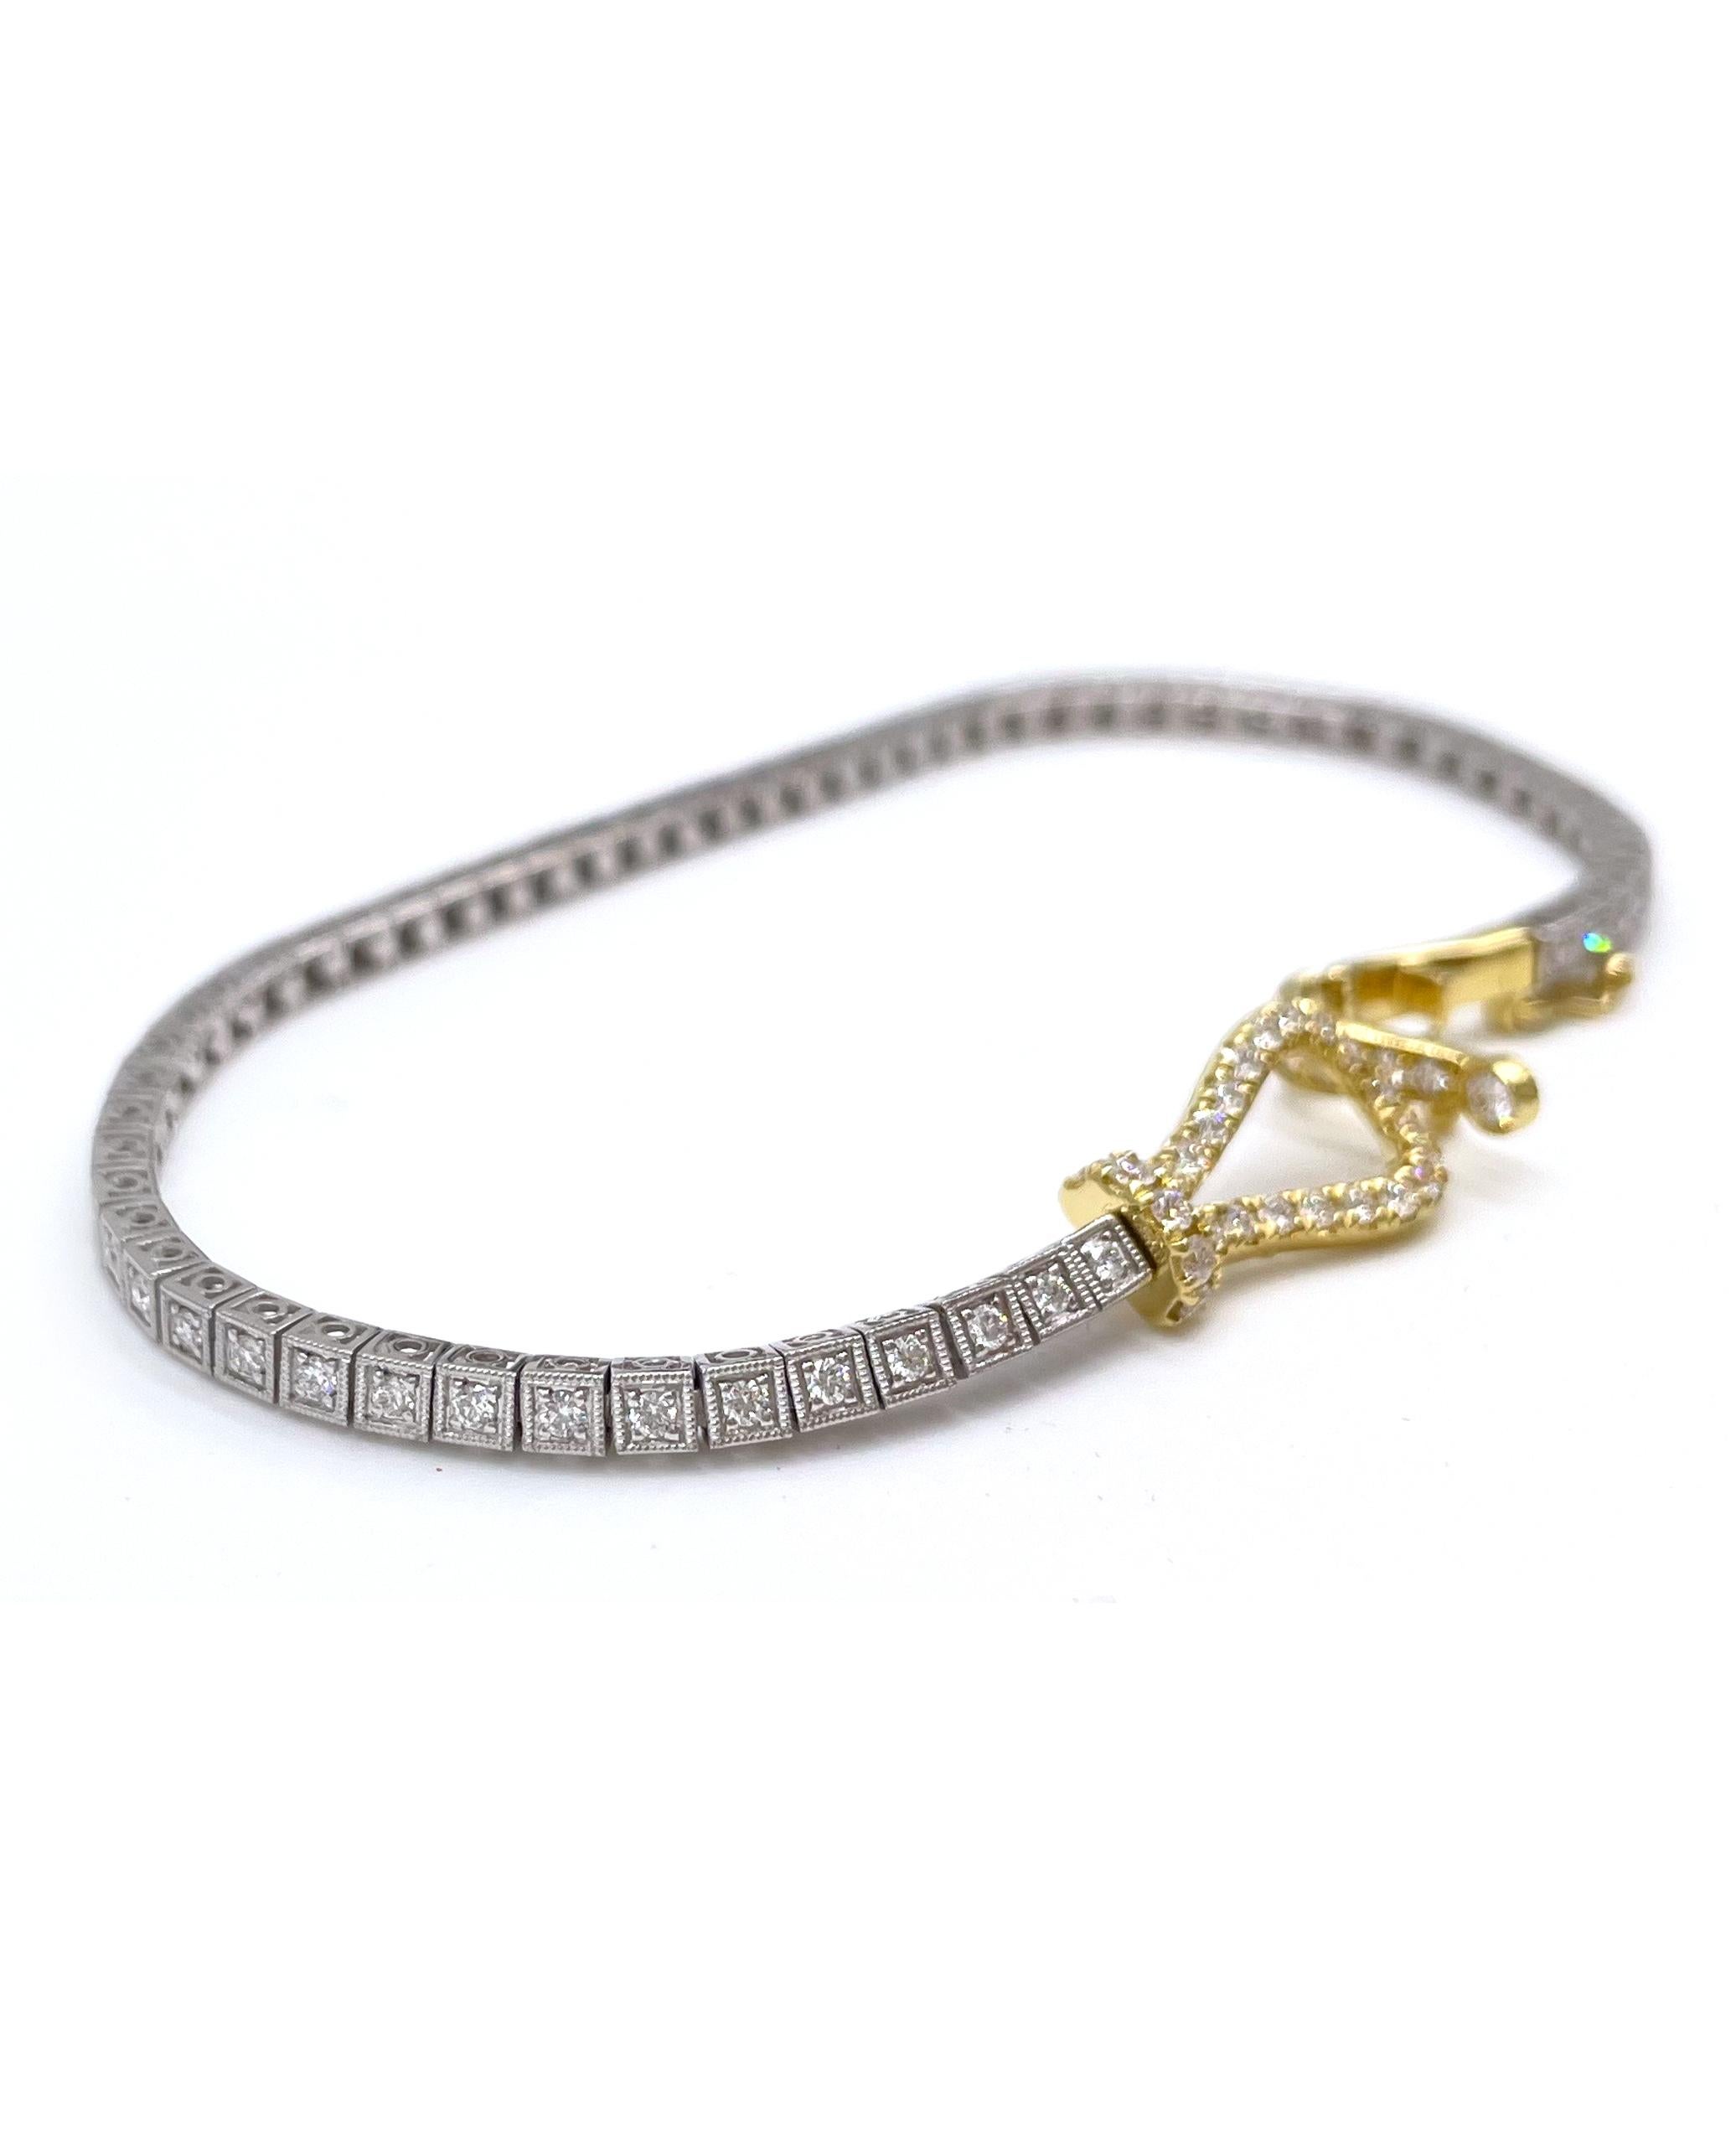 Contemporary Simon G. 18K Two Tone Gold Diamond Tennis Bracelet - MB1733-Y For Sale